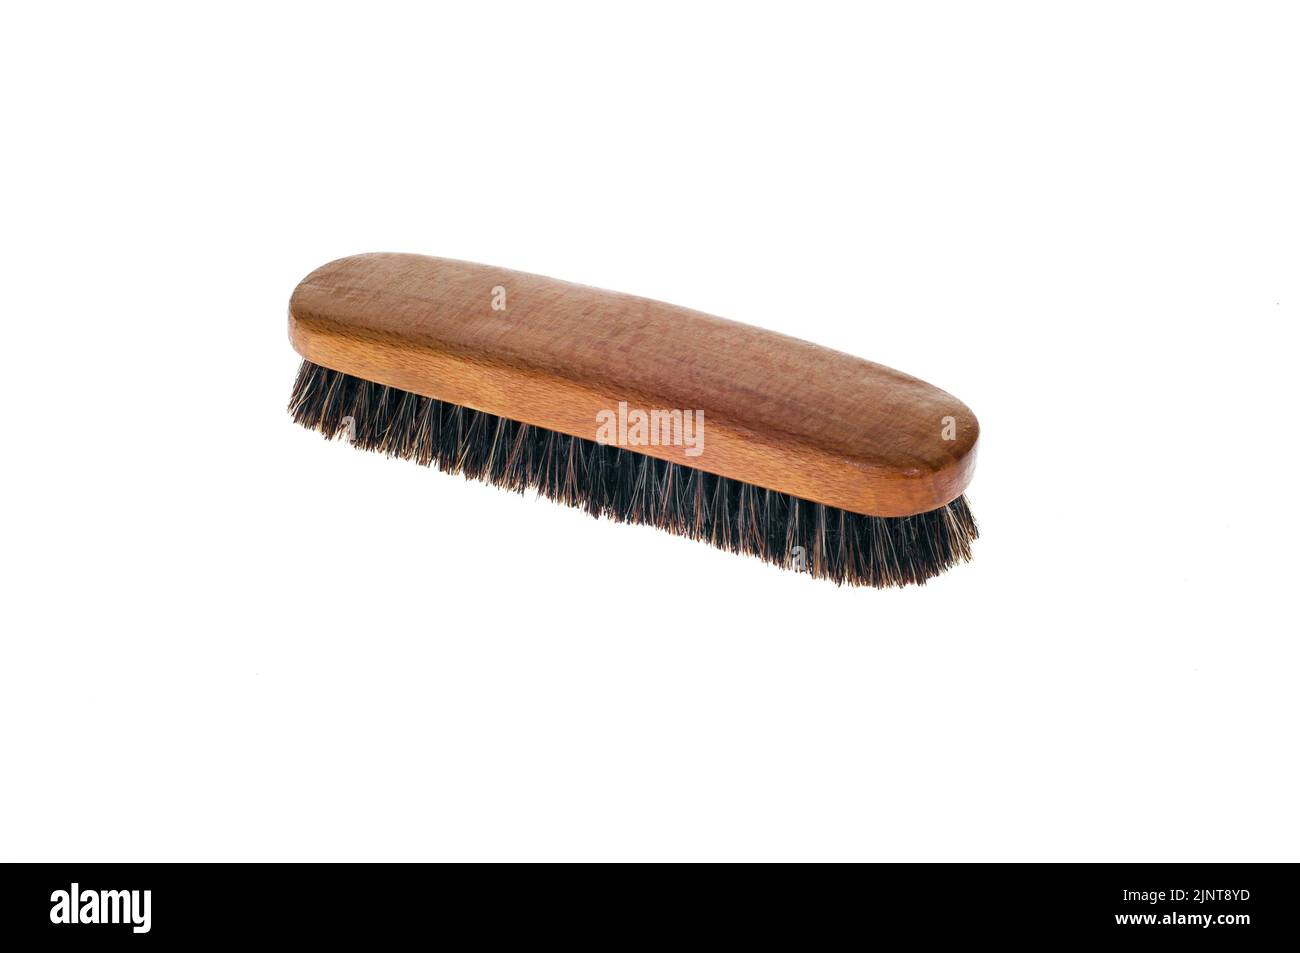 Wooden cleaning scrub brush on white background Stock Photo